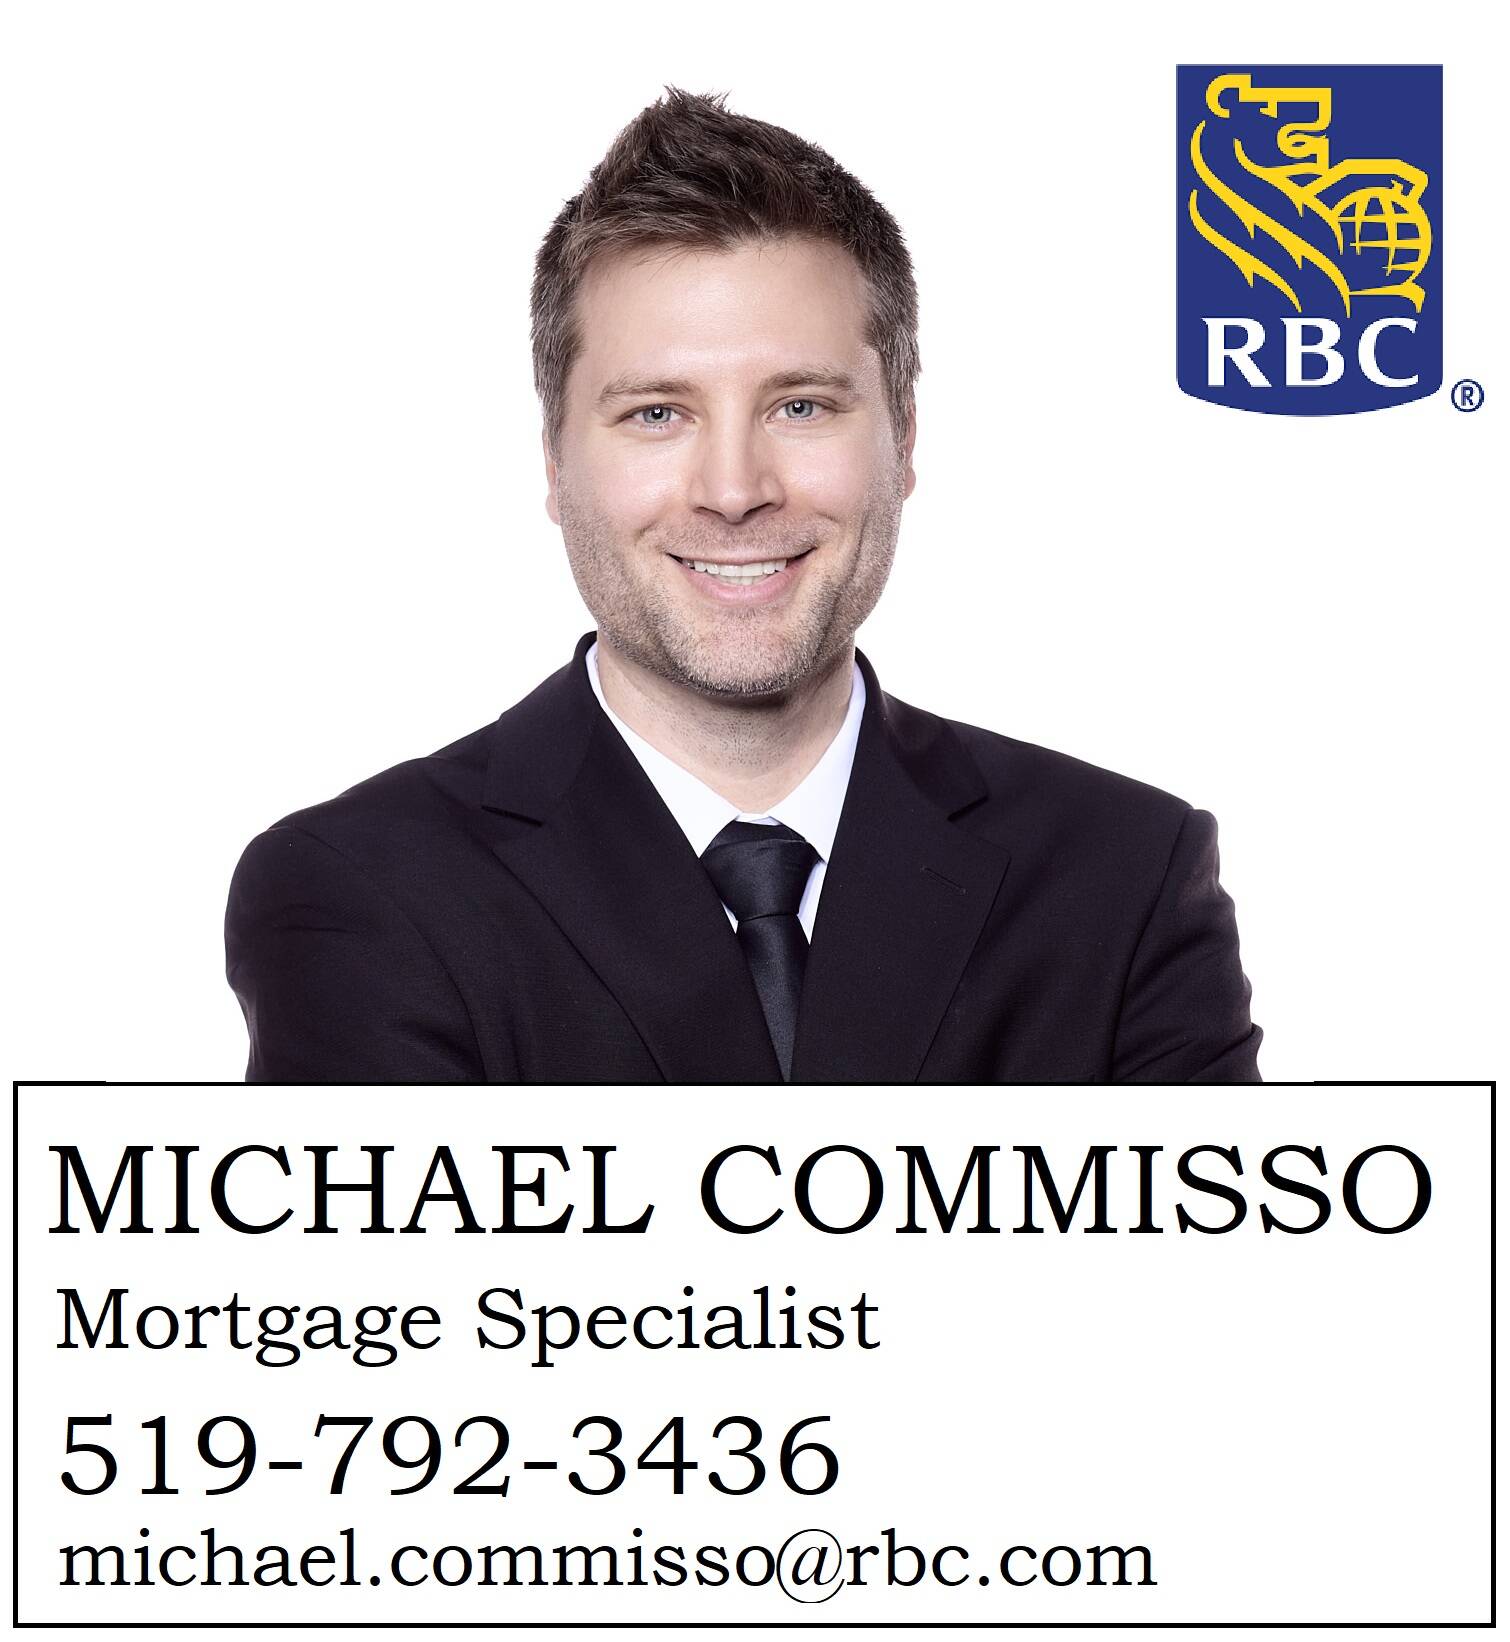 Michael Commisso, RBC Mortgage Specialist